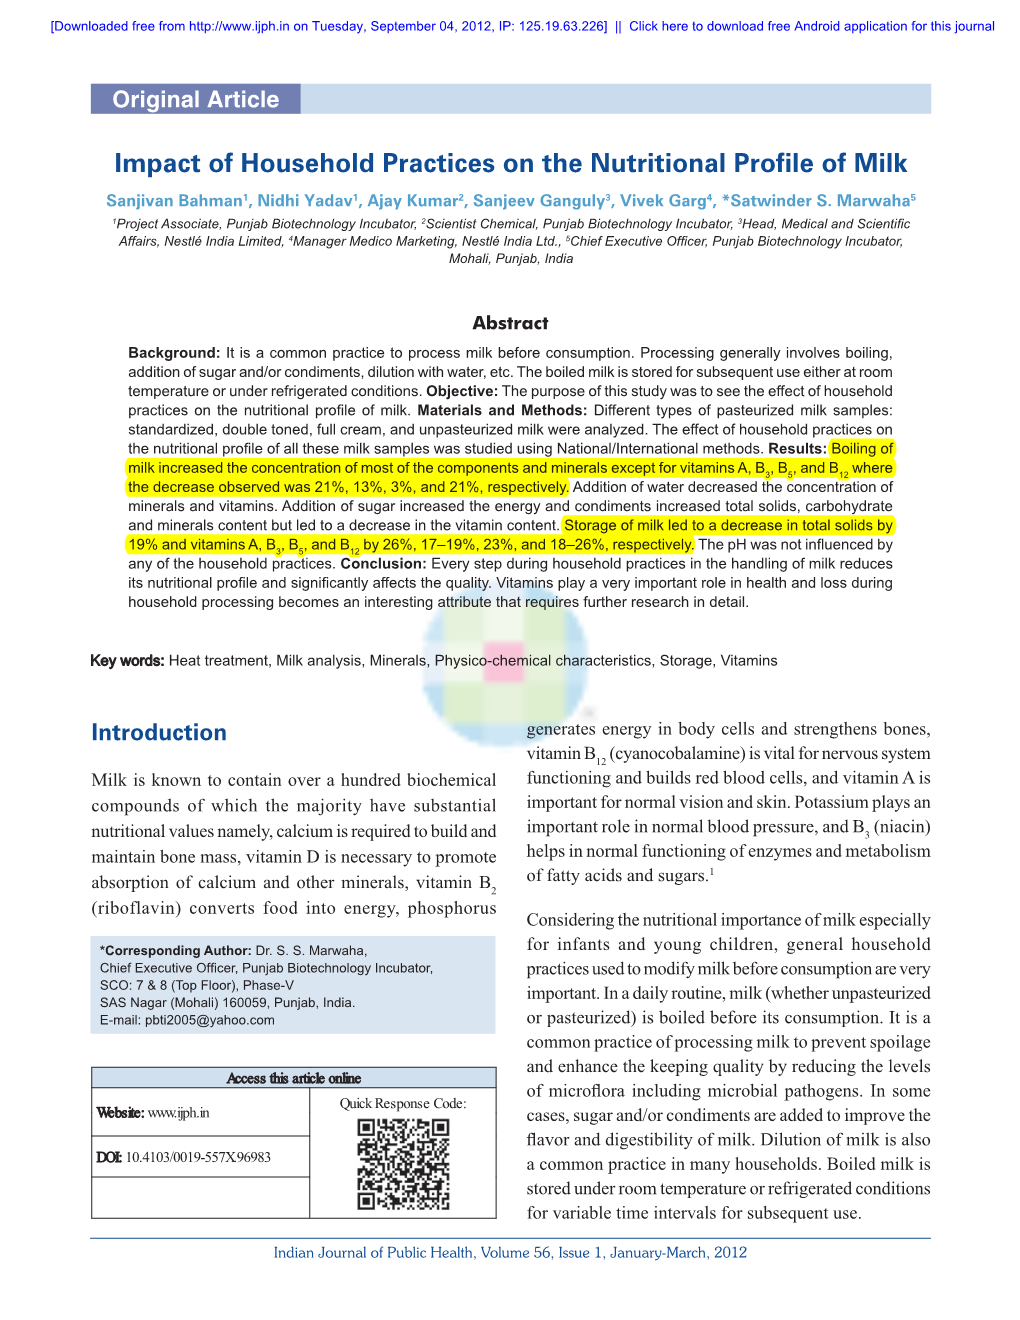 Impact of Household Practices on the Nutritional Profile of Milk Sanjivan Bahman1, Nidhi Yadav1, Ajay Kumar2, Sanjeev Ganguly3, Vivek Garg4, *Satwinder S